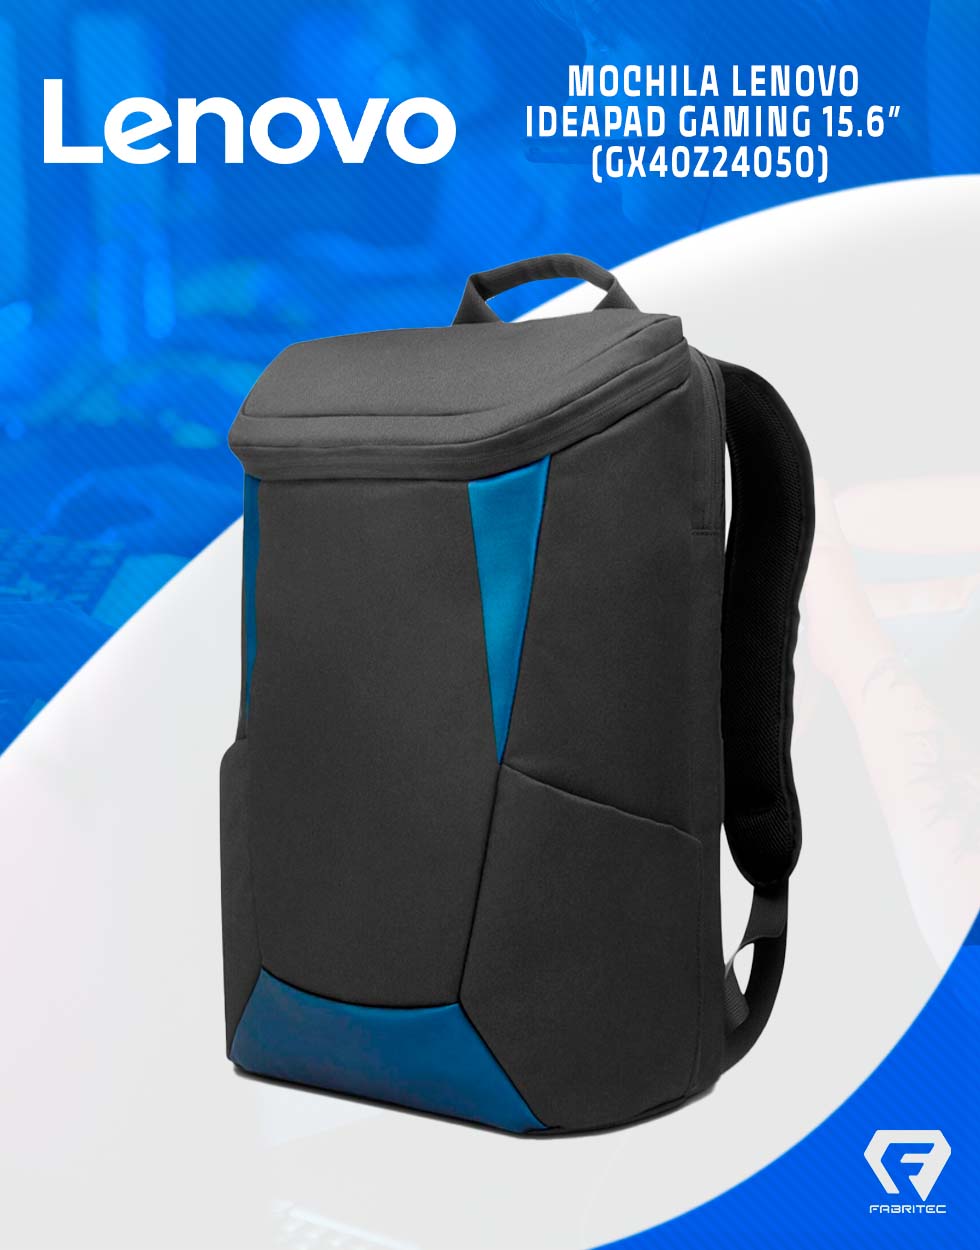 Mochila Lenovo Ideapad Gaming 15.6 Backpack